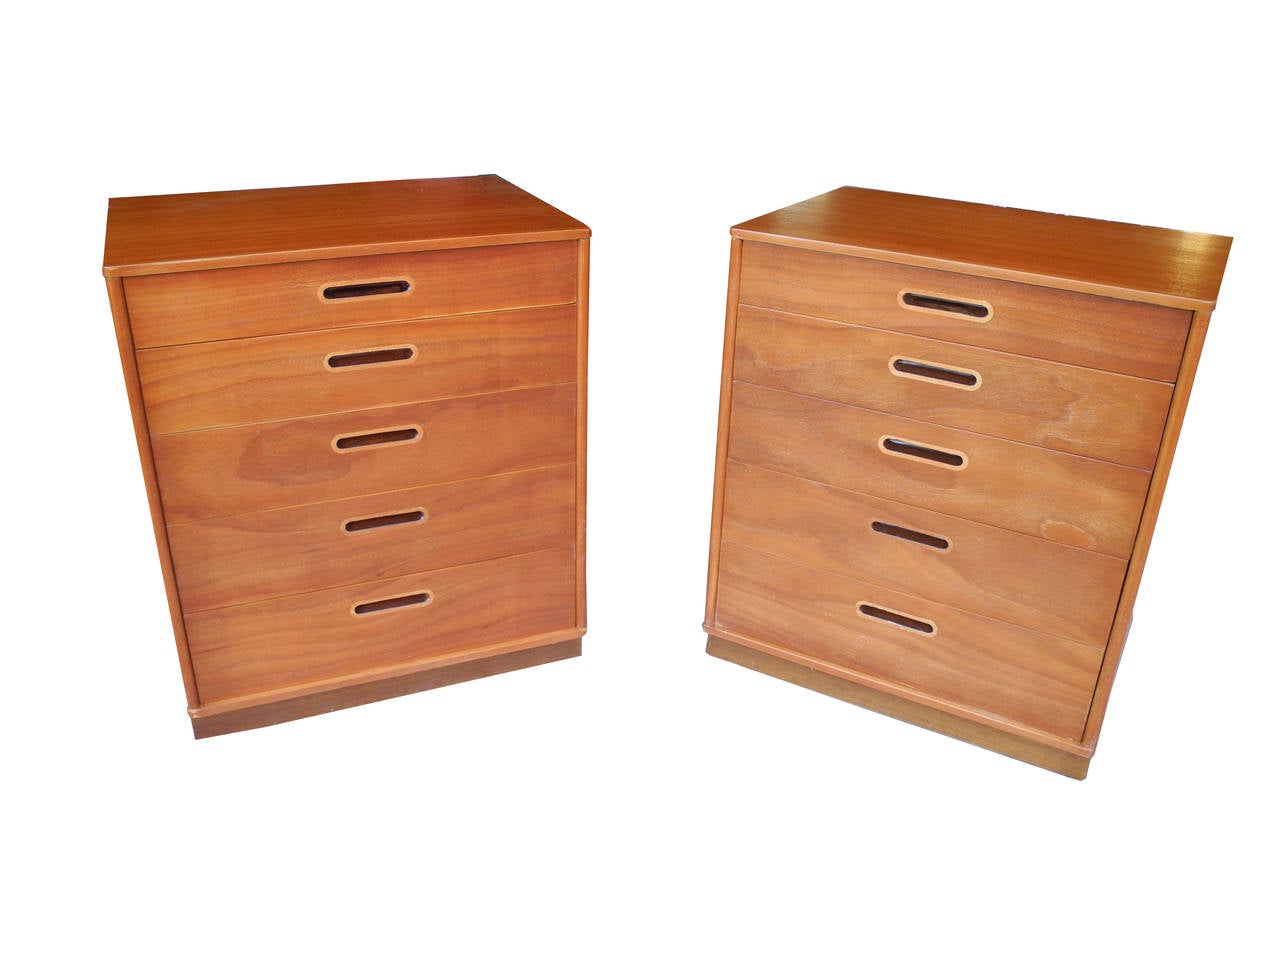 American Pair of Small Dressers by T. H. Robsjohn Gibbings